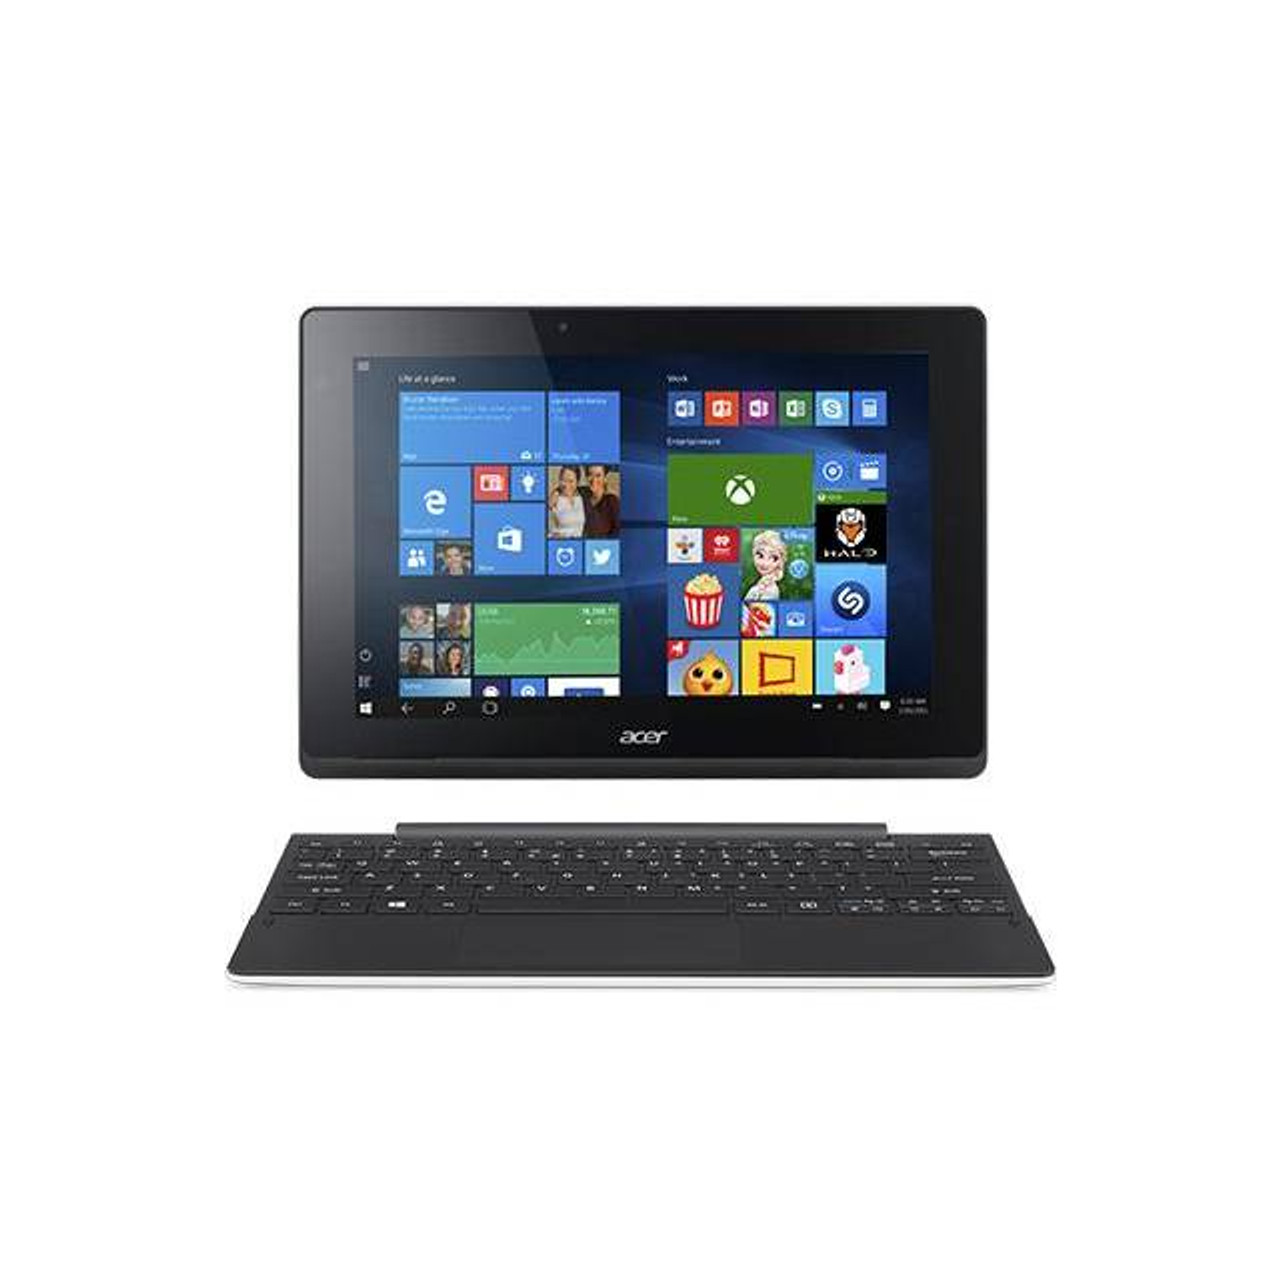 Acer Aspire Switch 10 E SW3-016-19CR 10.1 inch Touchscreen Intel Atom x5-Z8300 1.44GHz/ 2GB LPDDR3L/ 64GB eMMC/ Windows 10 Home Tablet w/ Keyboard (White)